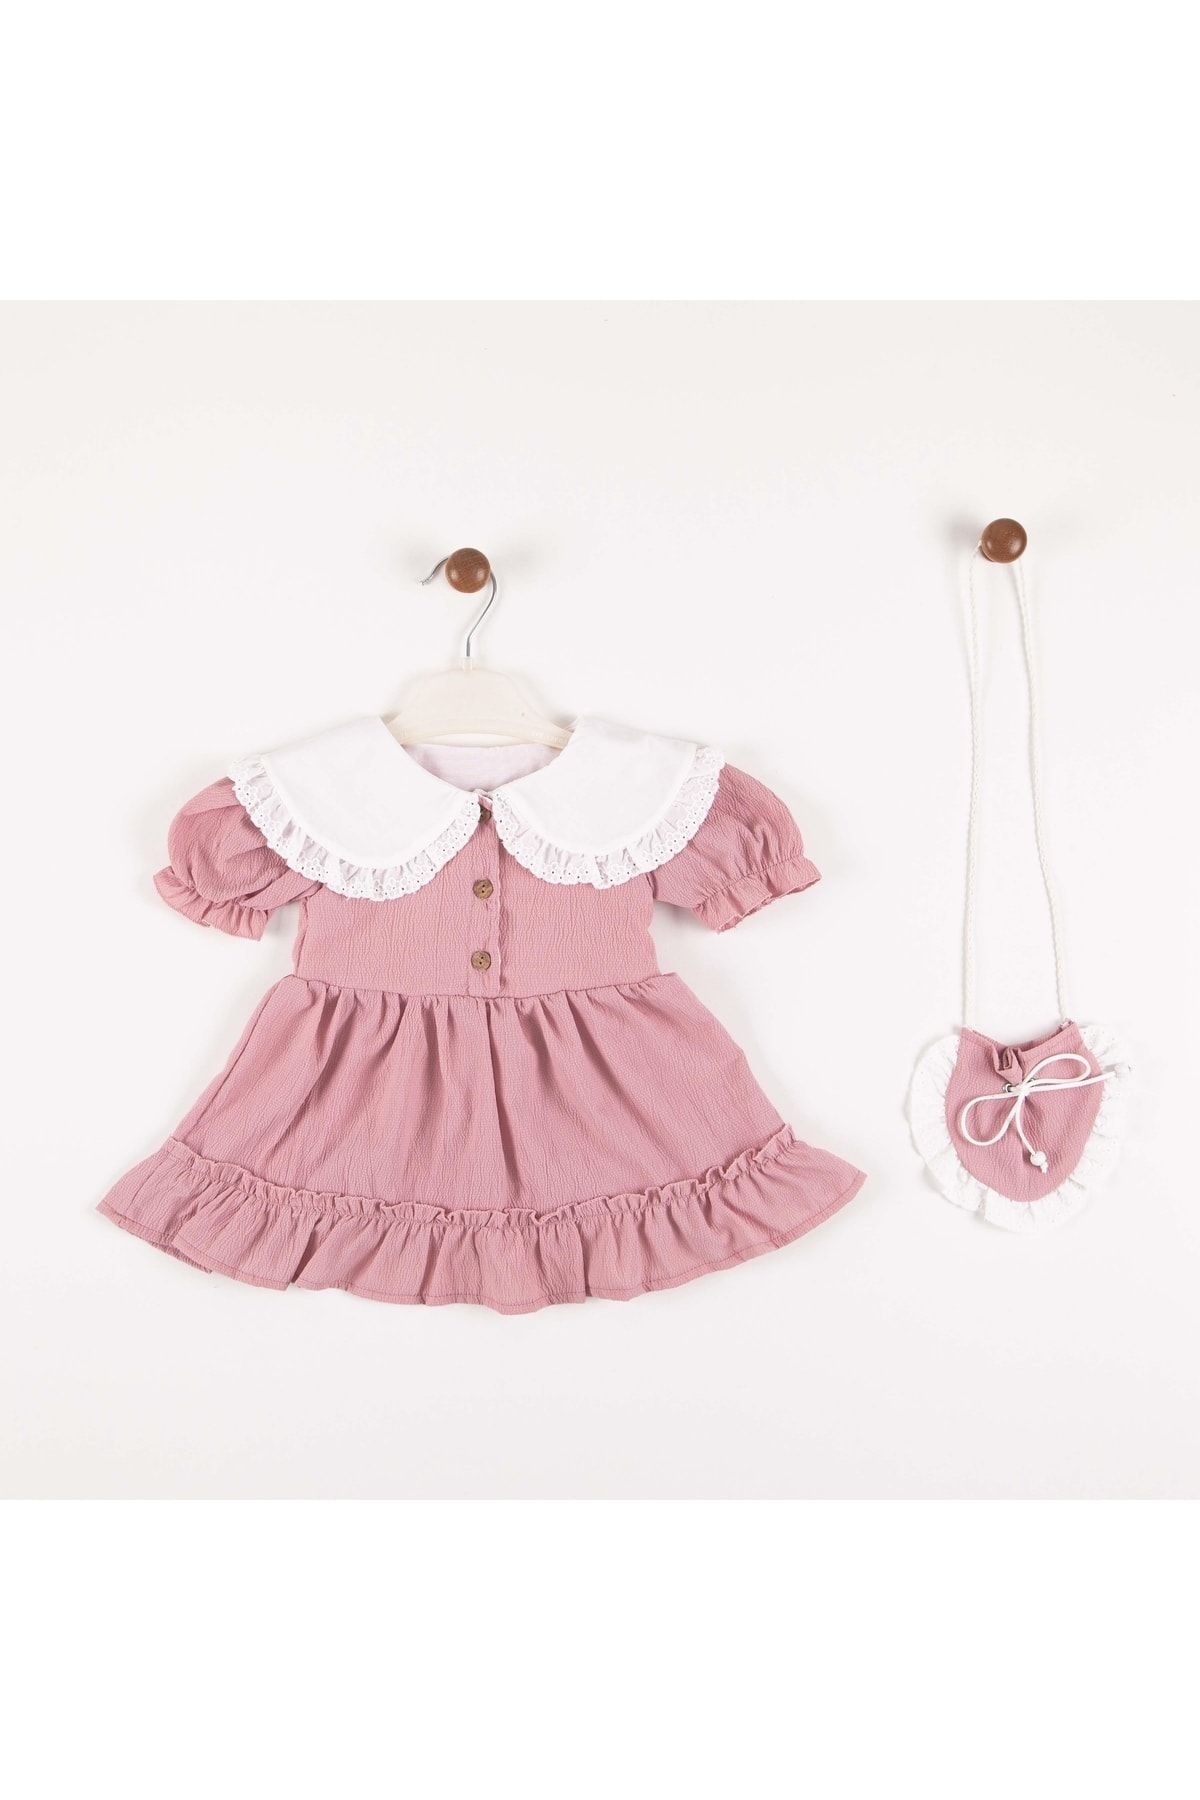 MİNİKO KİDS Kız Bebek Yaka Dantelli Kısa Kol Çantalı Pamuk Elbise